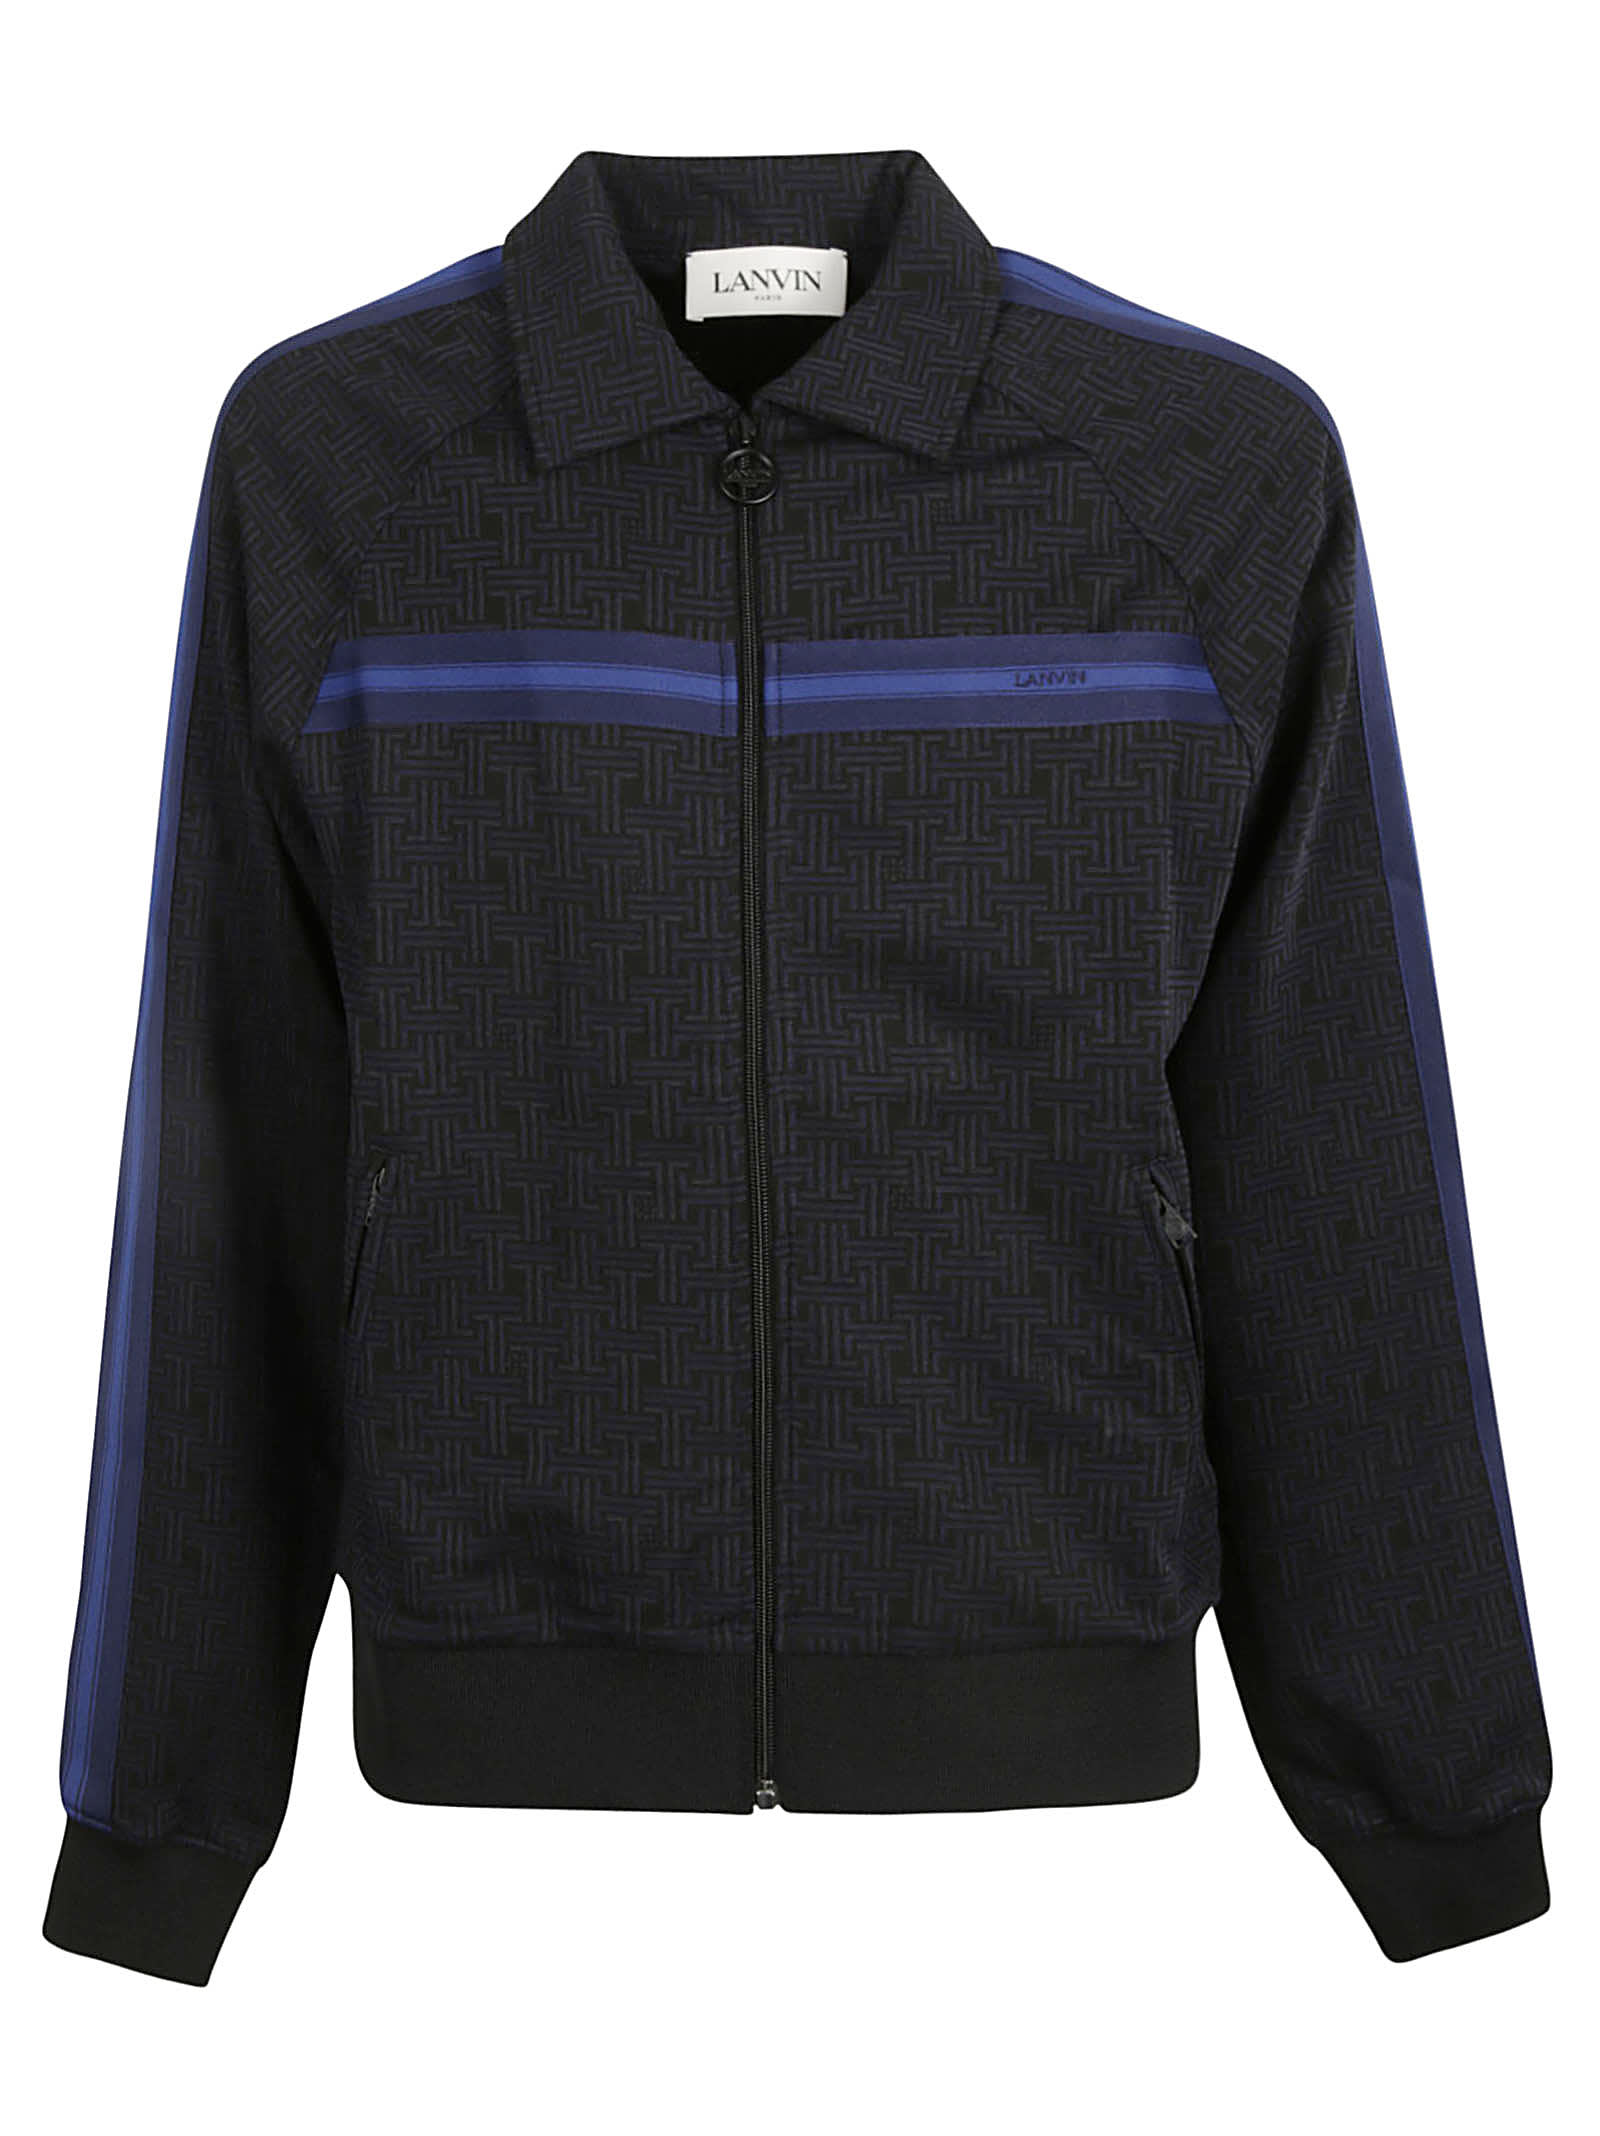 Lanvin Stripe Patch Zipped Jacket